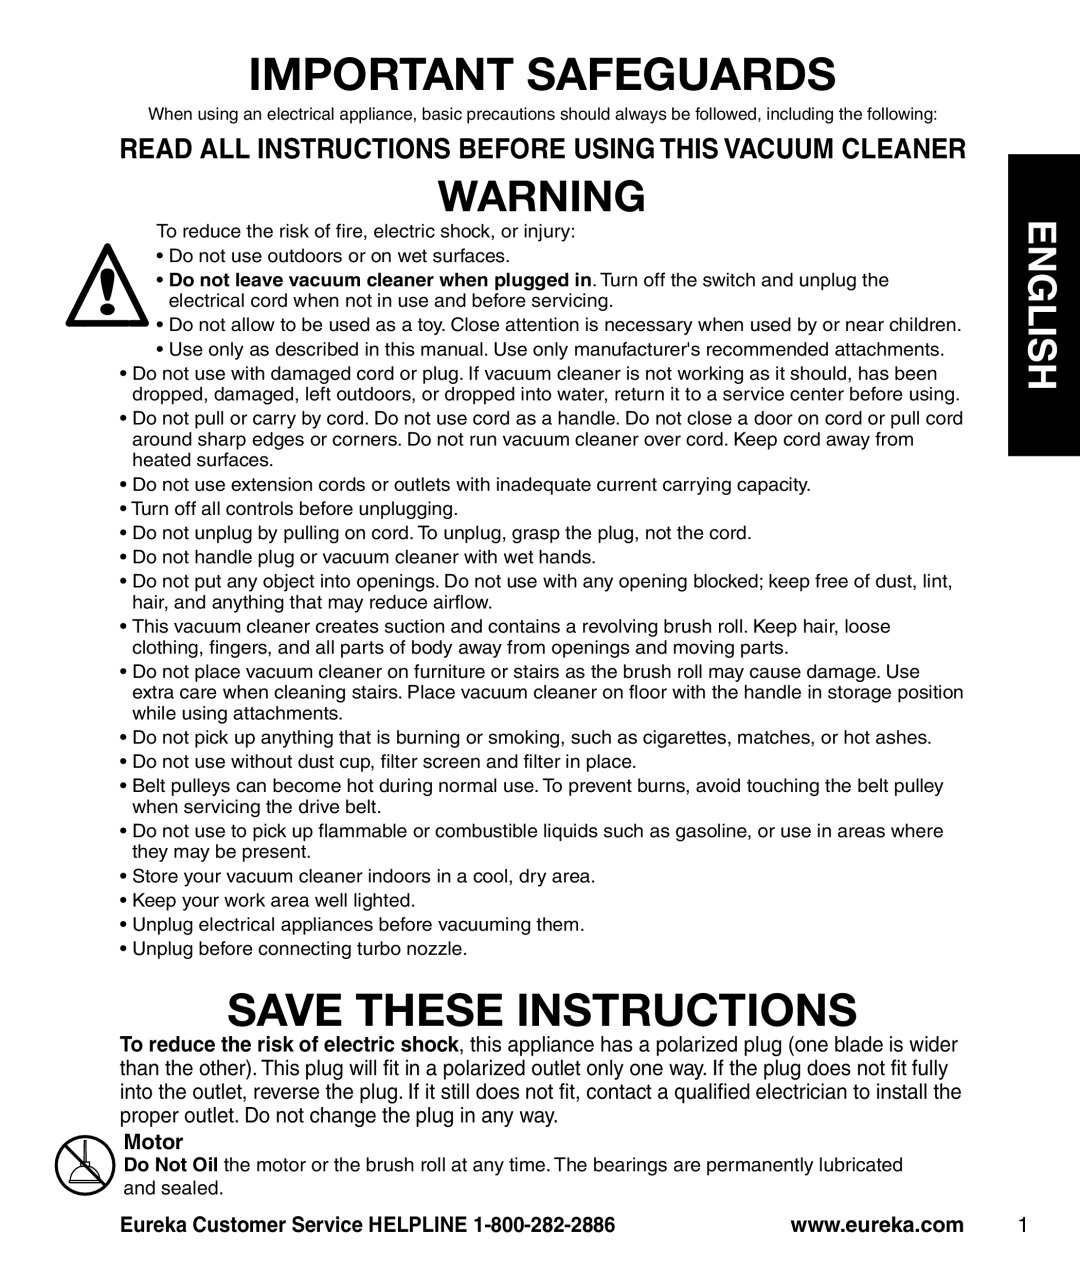 Eureka 4770 manual English, Motor, Important Safeguards, Save These Instructions, Eureka Customer Service HELPLINE 